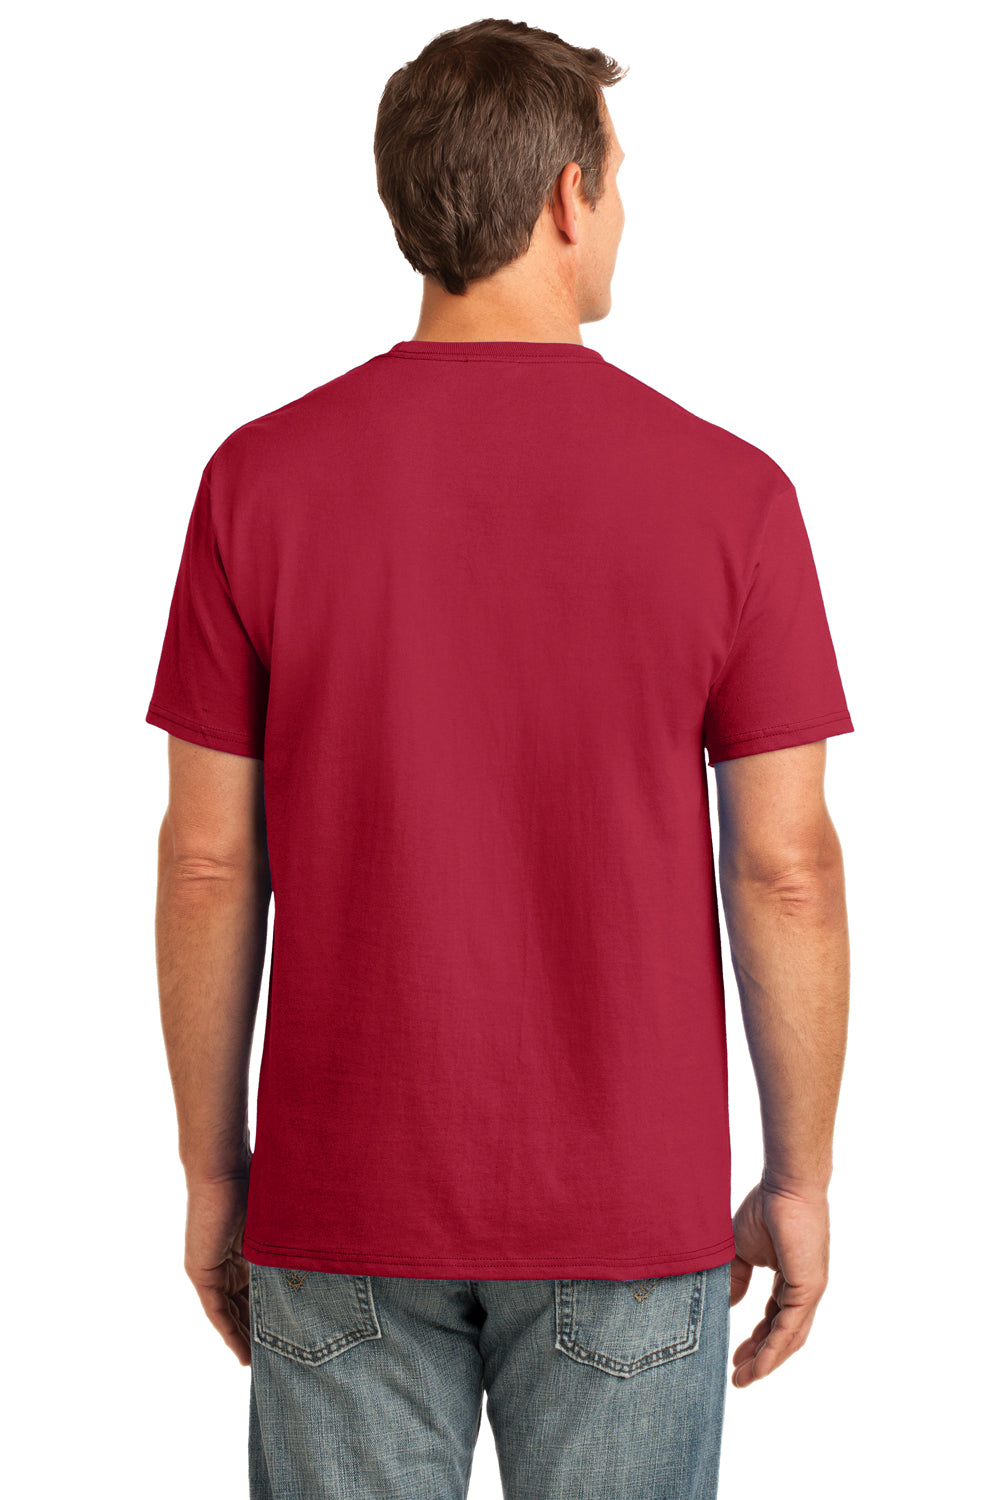 Port & Company PC54P Mens Core Short Sleeve Crewneck T-Shirt w/ Pocket Red Back